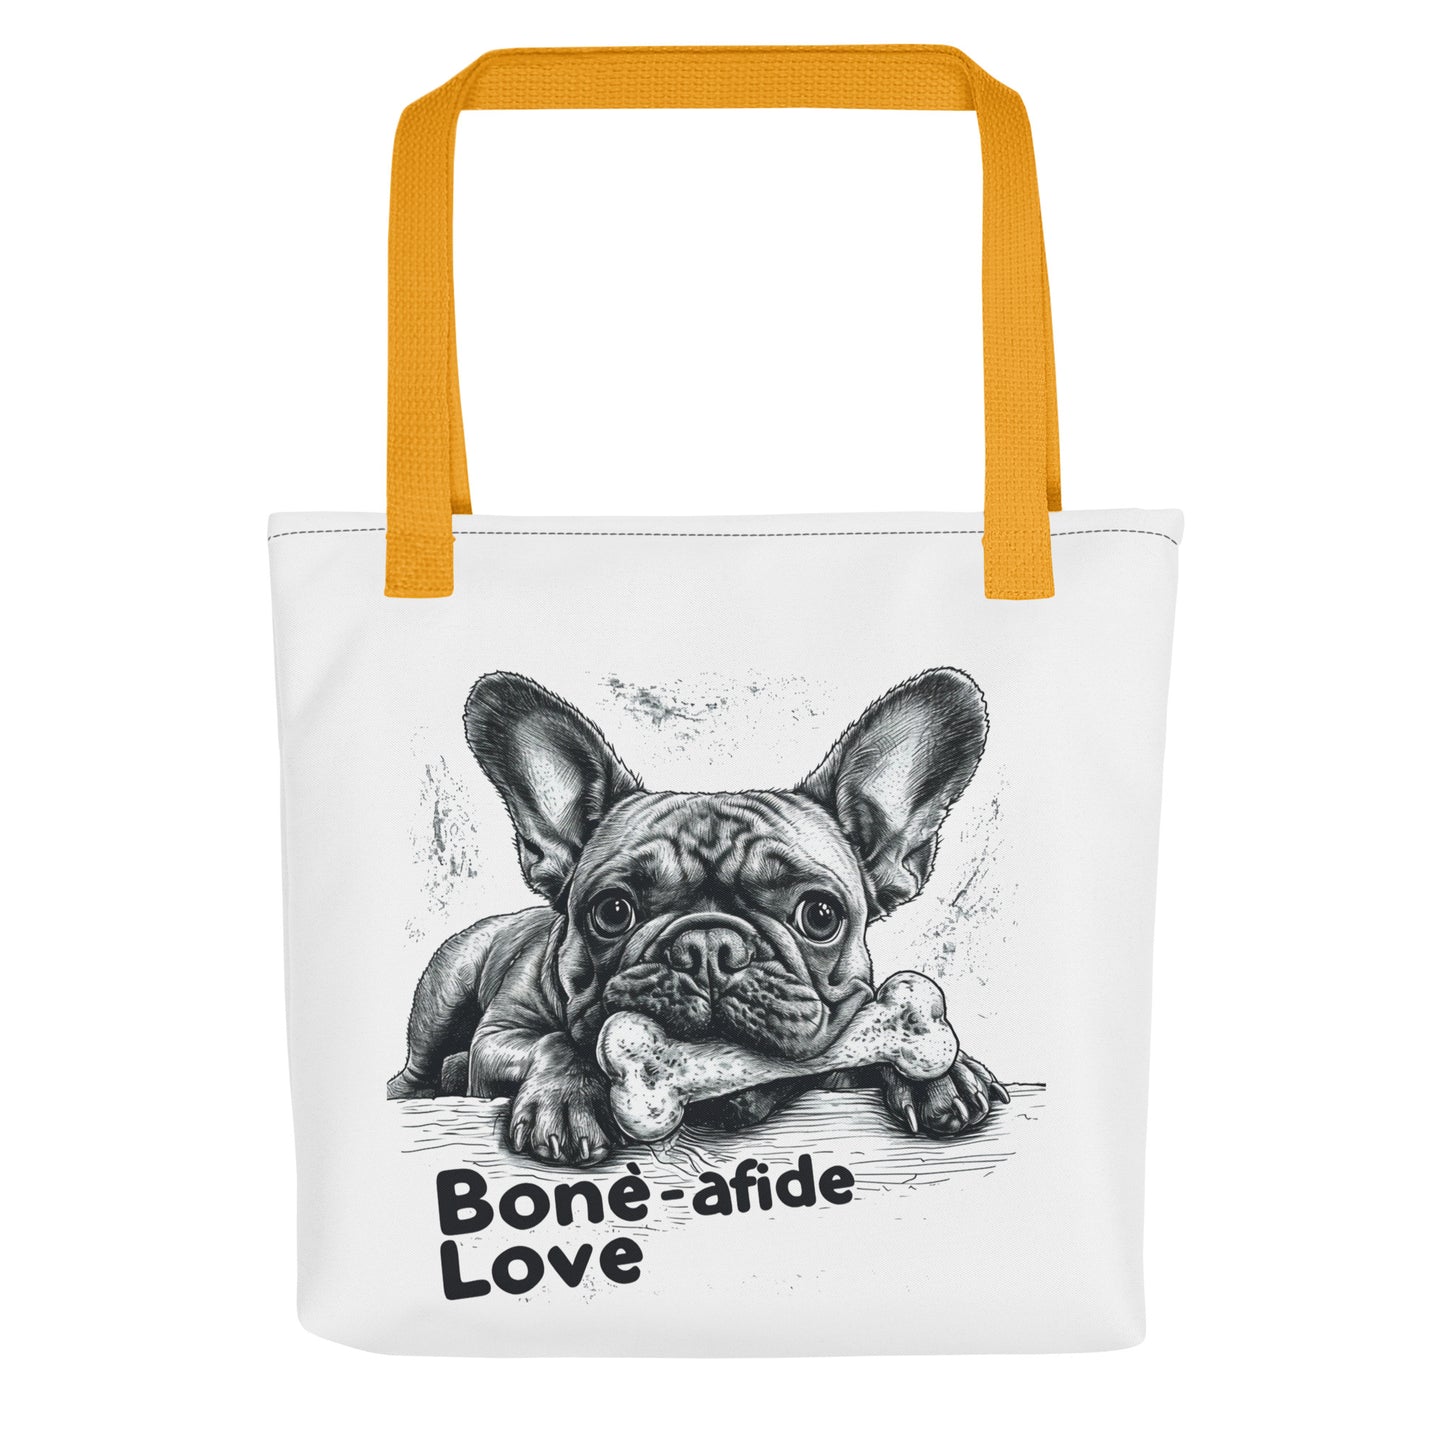 "Bone-afide Love" Frenchie Tote bag